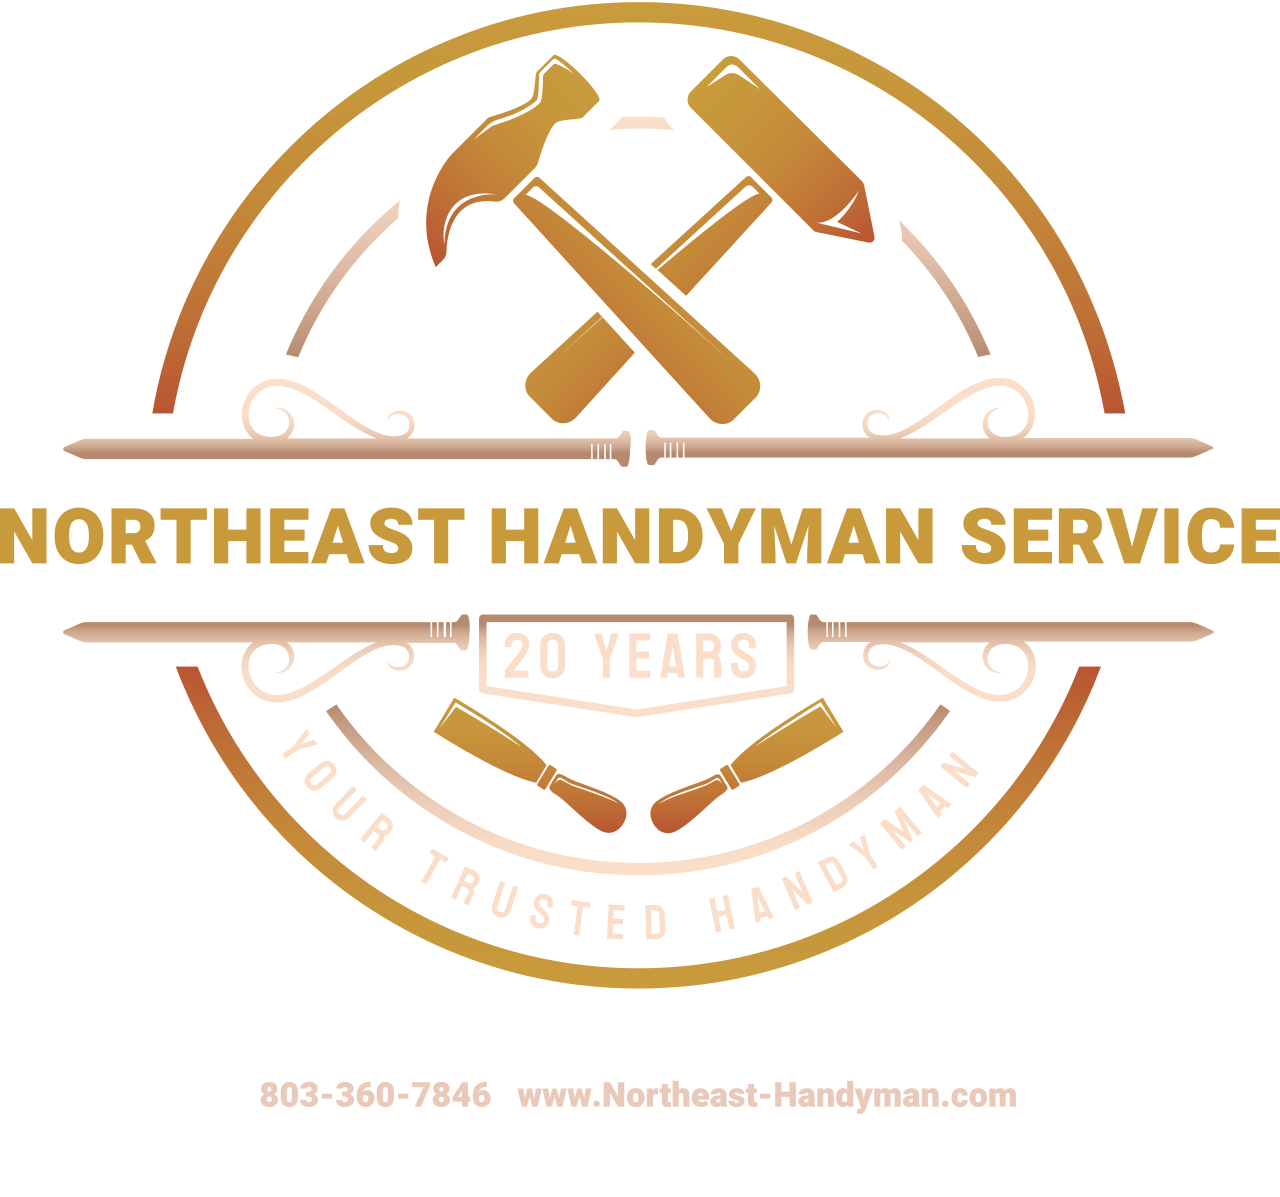 Northeast Handyman service's logo